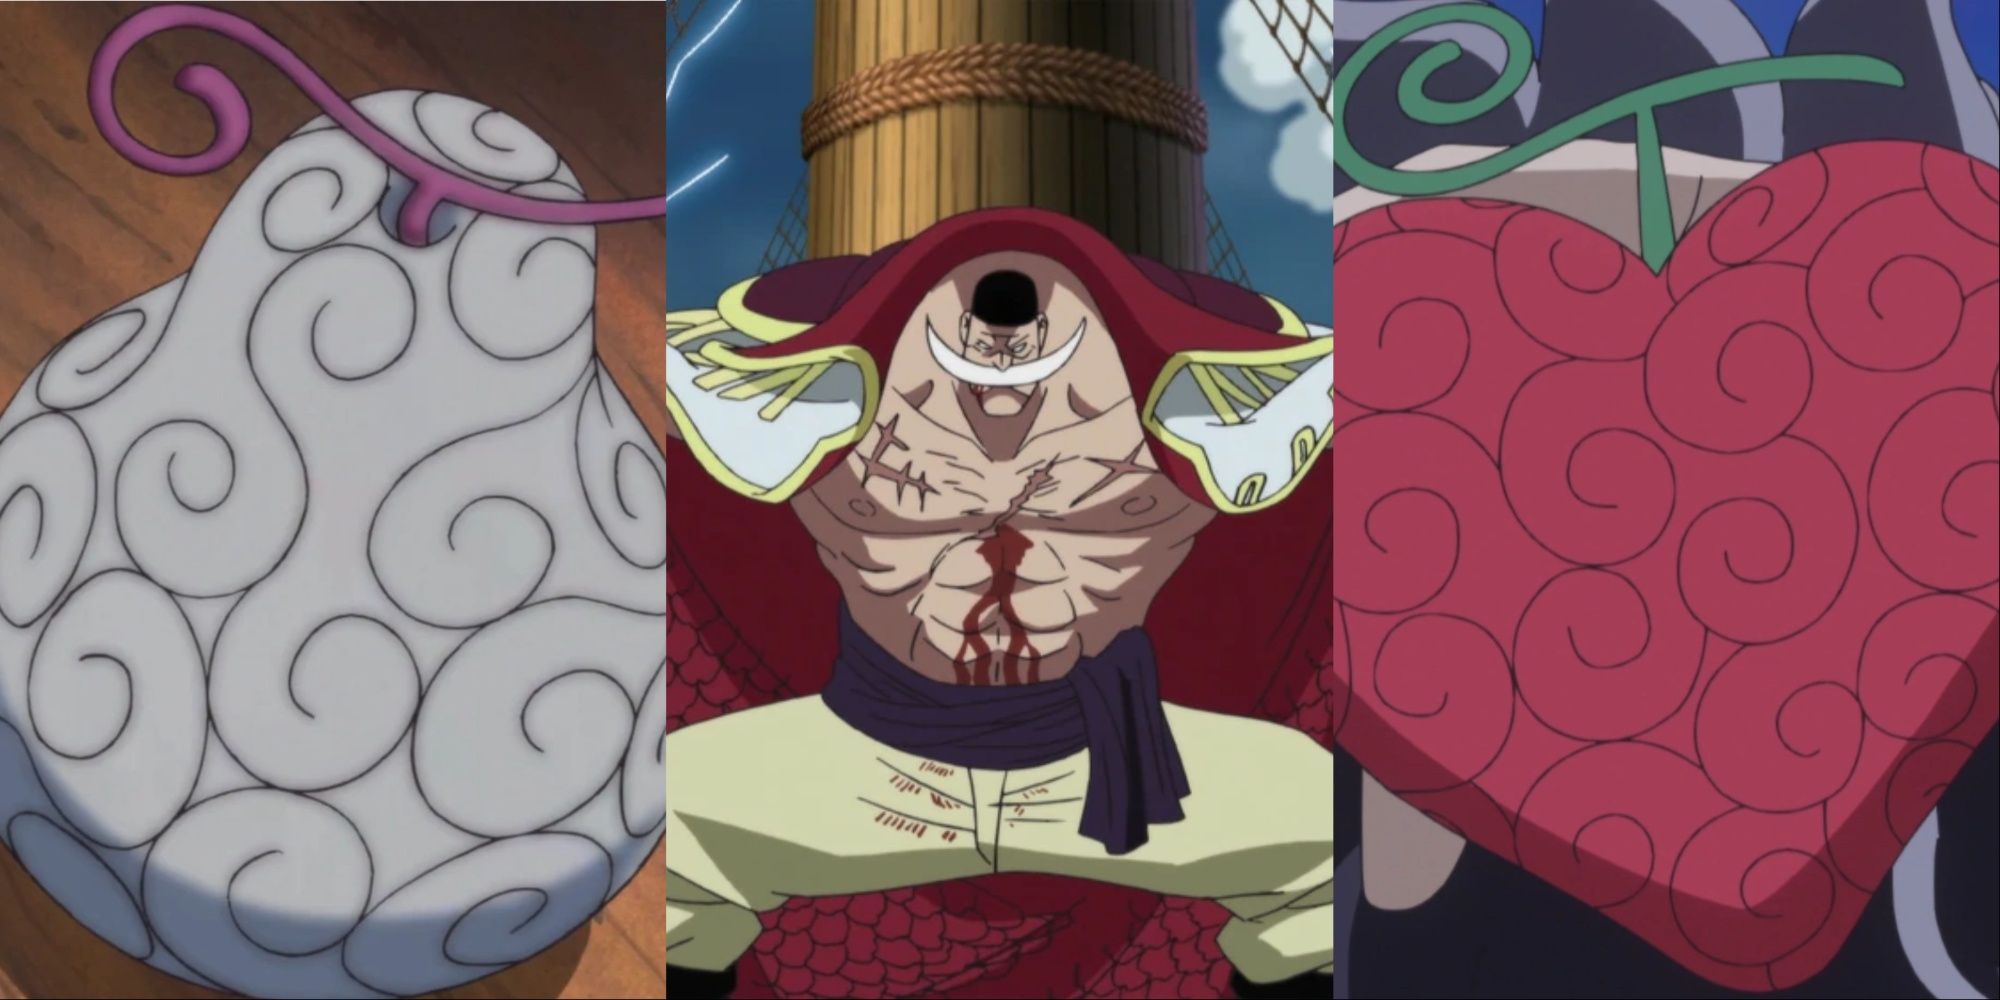 The Ito Ito no Mi, Ope Ope no Mi and Whitebeard from One Piece.